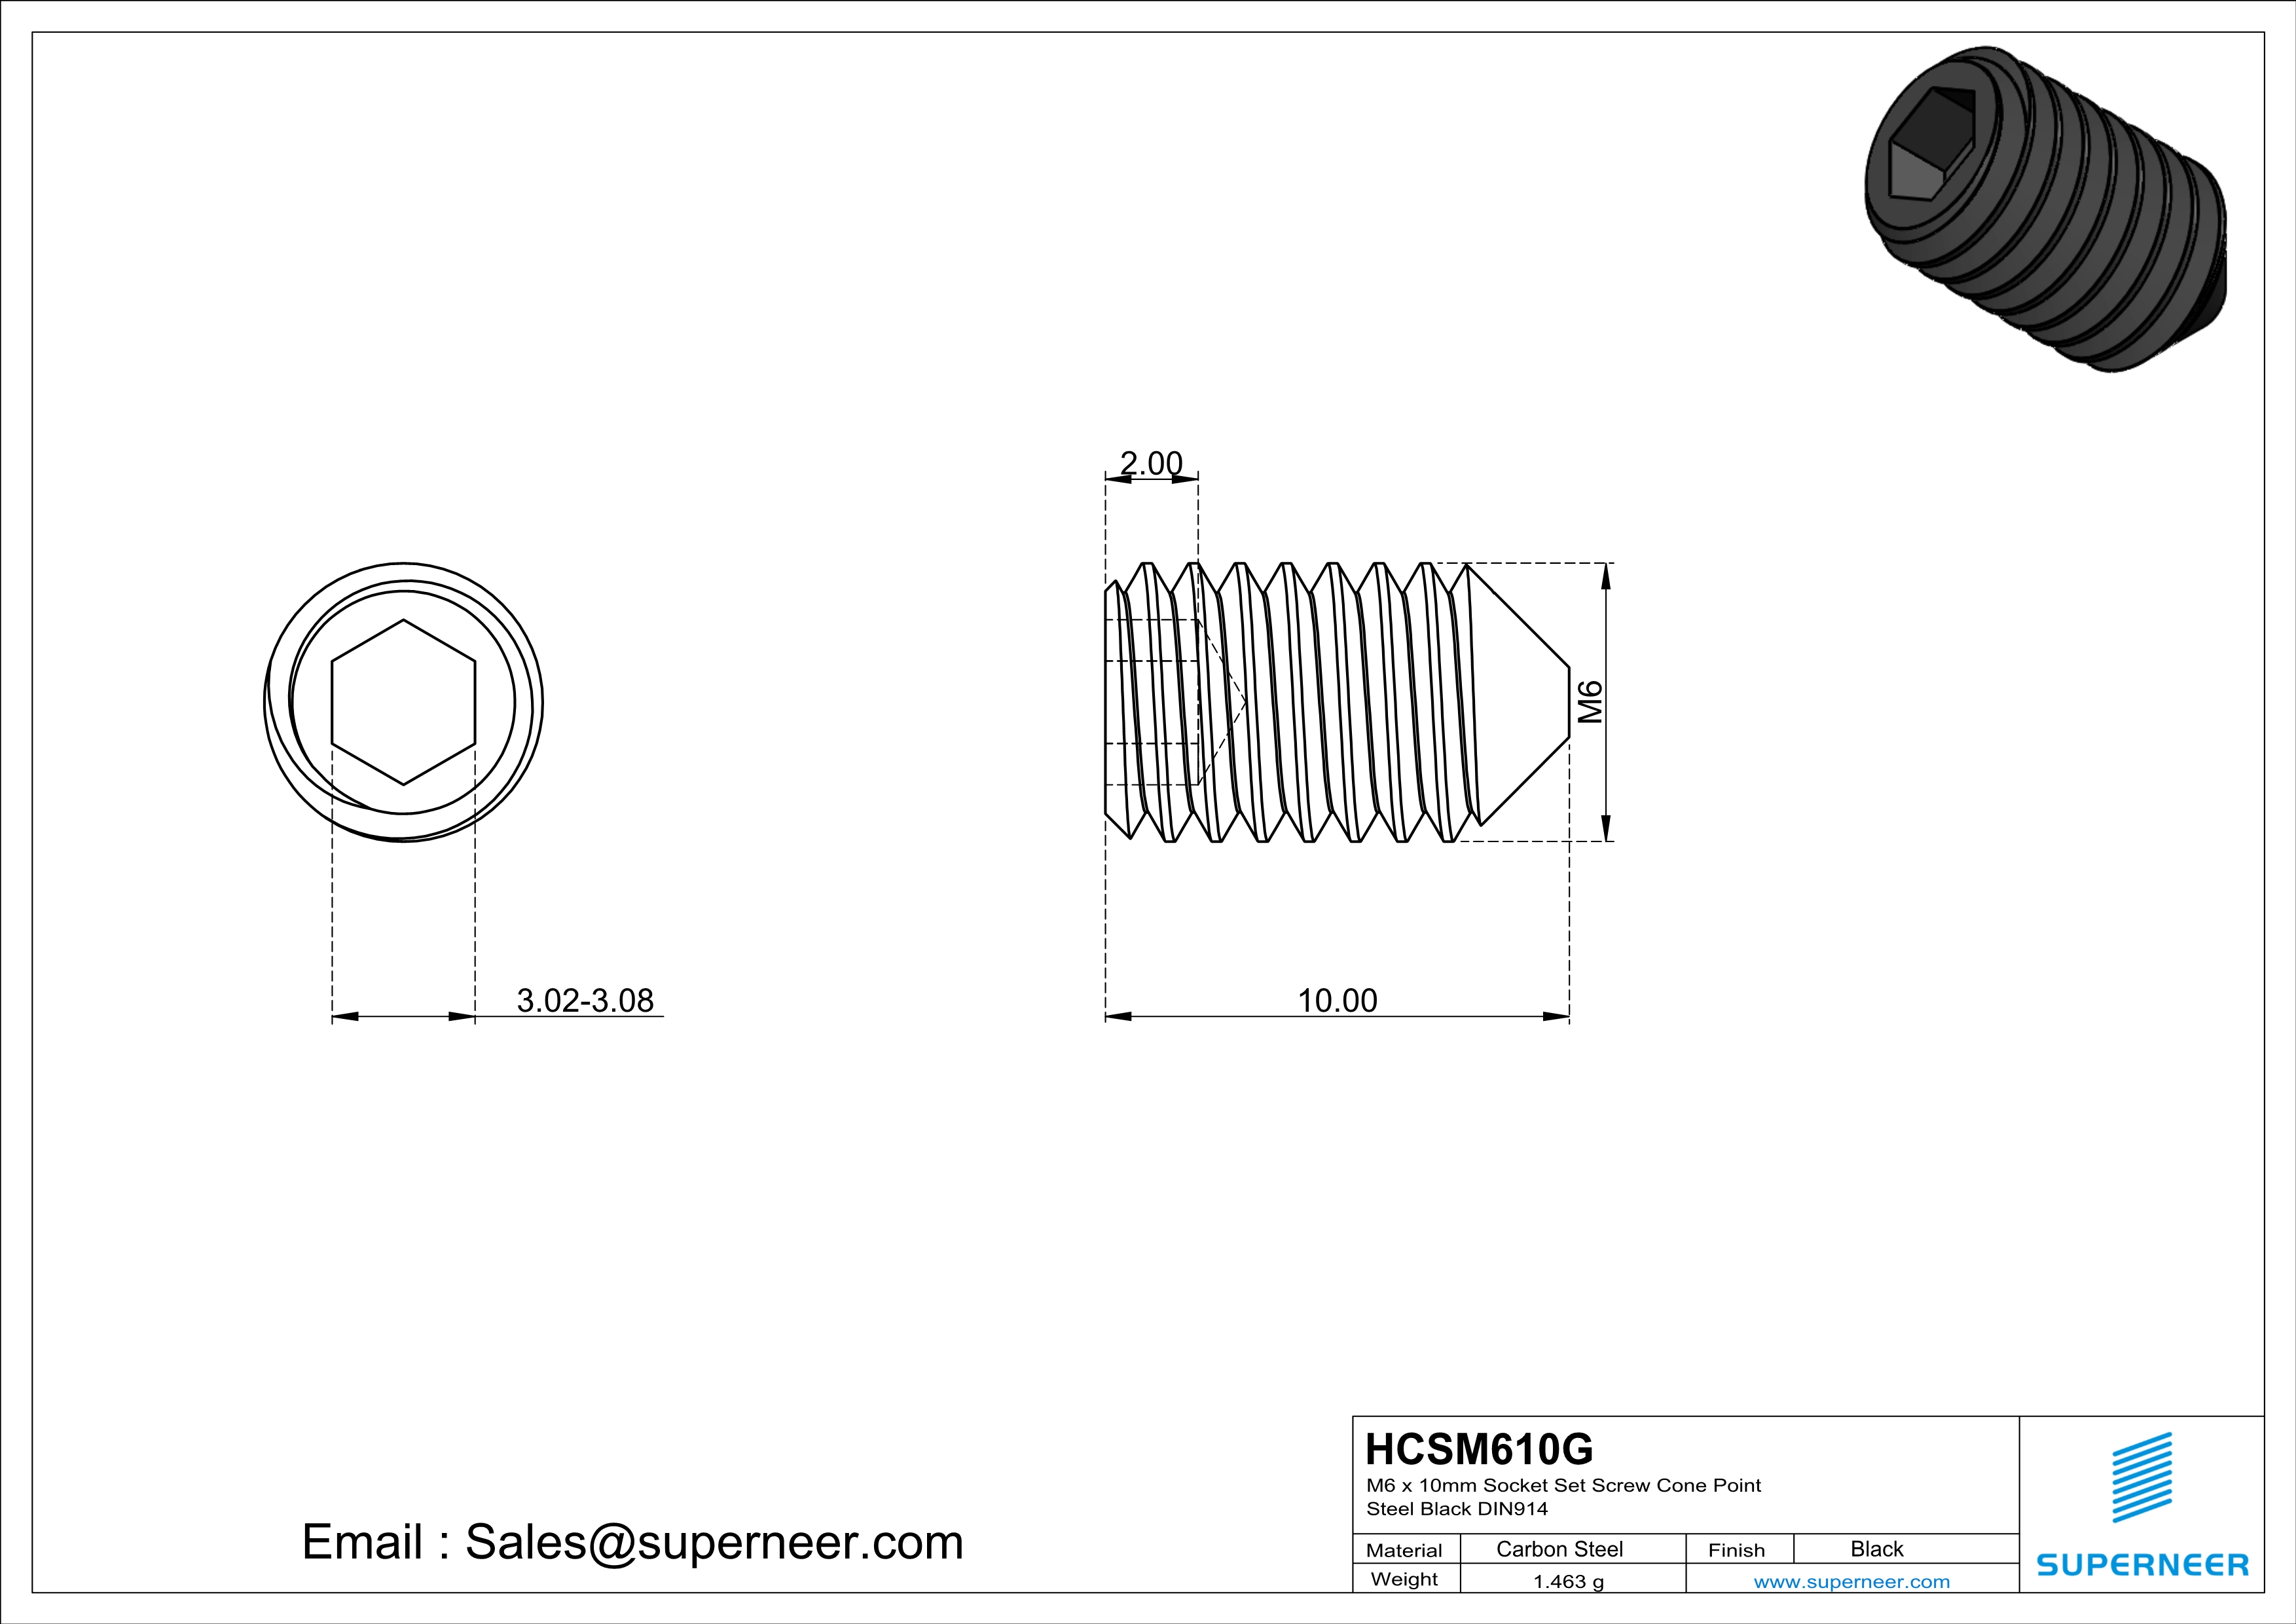 M6 x 10mm Socket Set Screw Cone Point 12.9 Carbon Steel Black DIN914